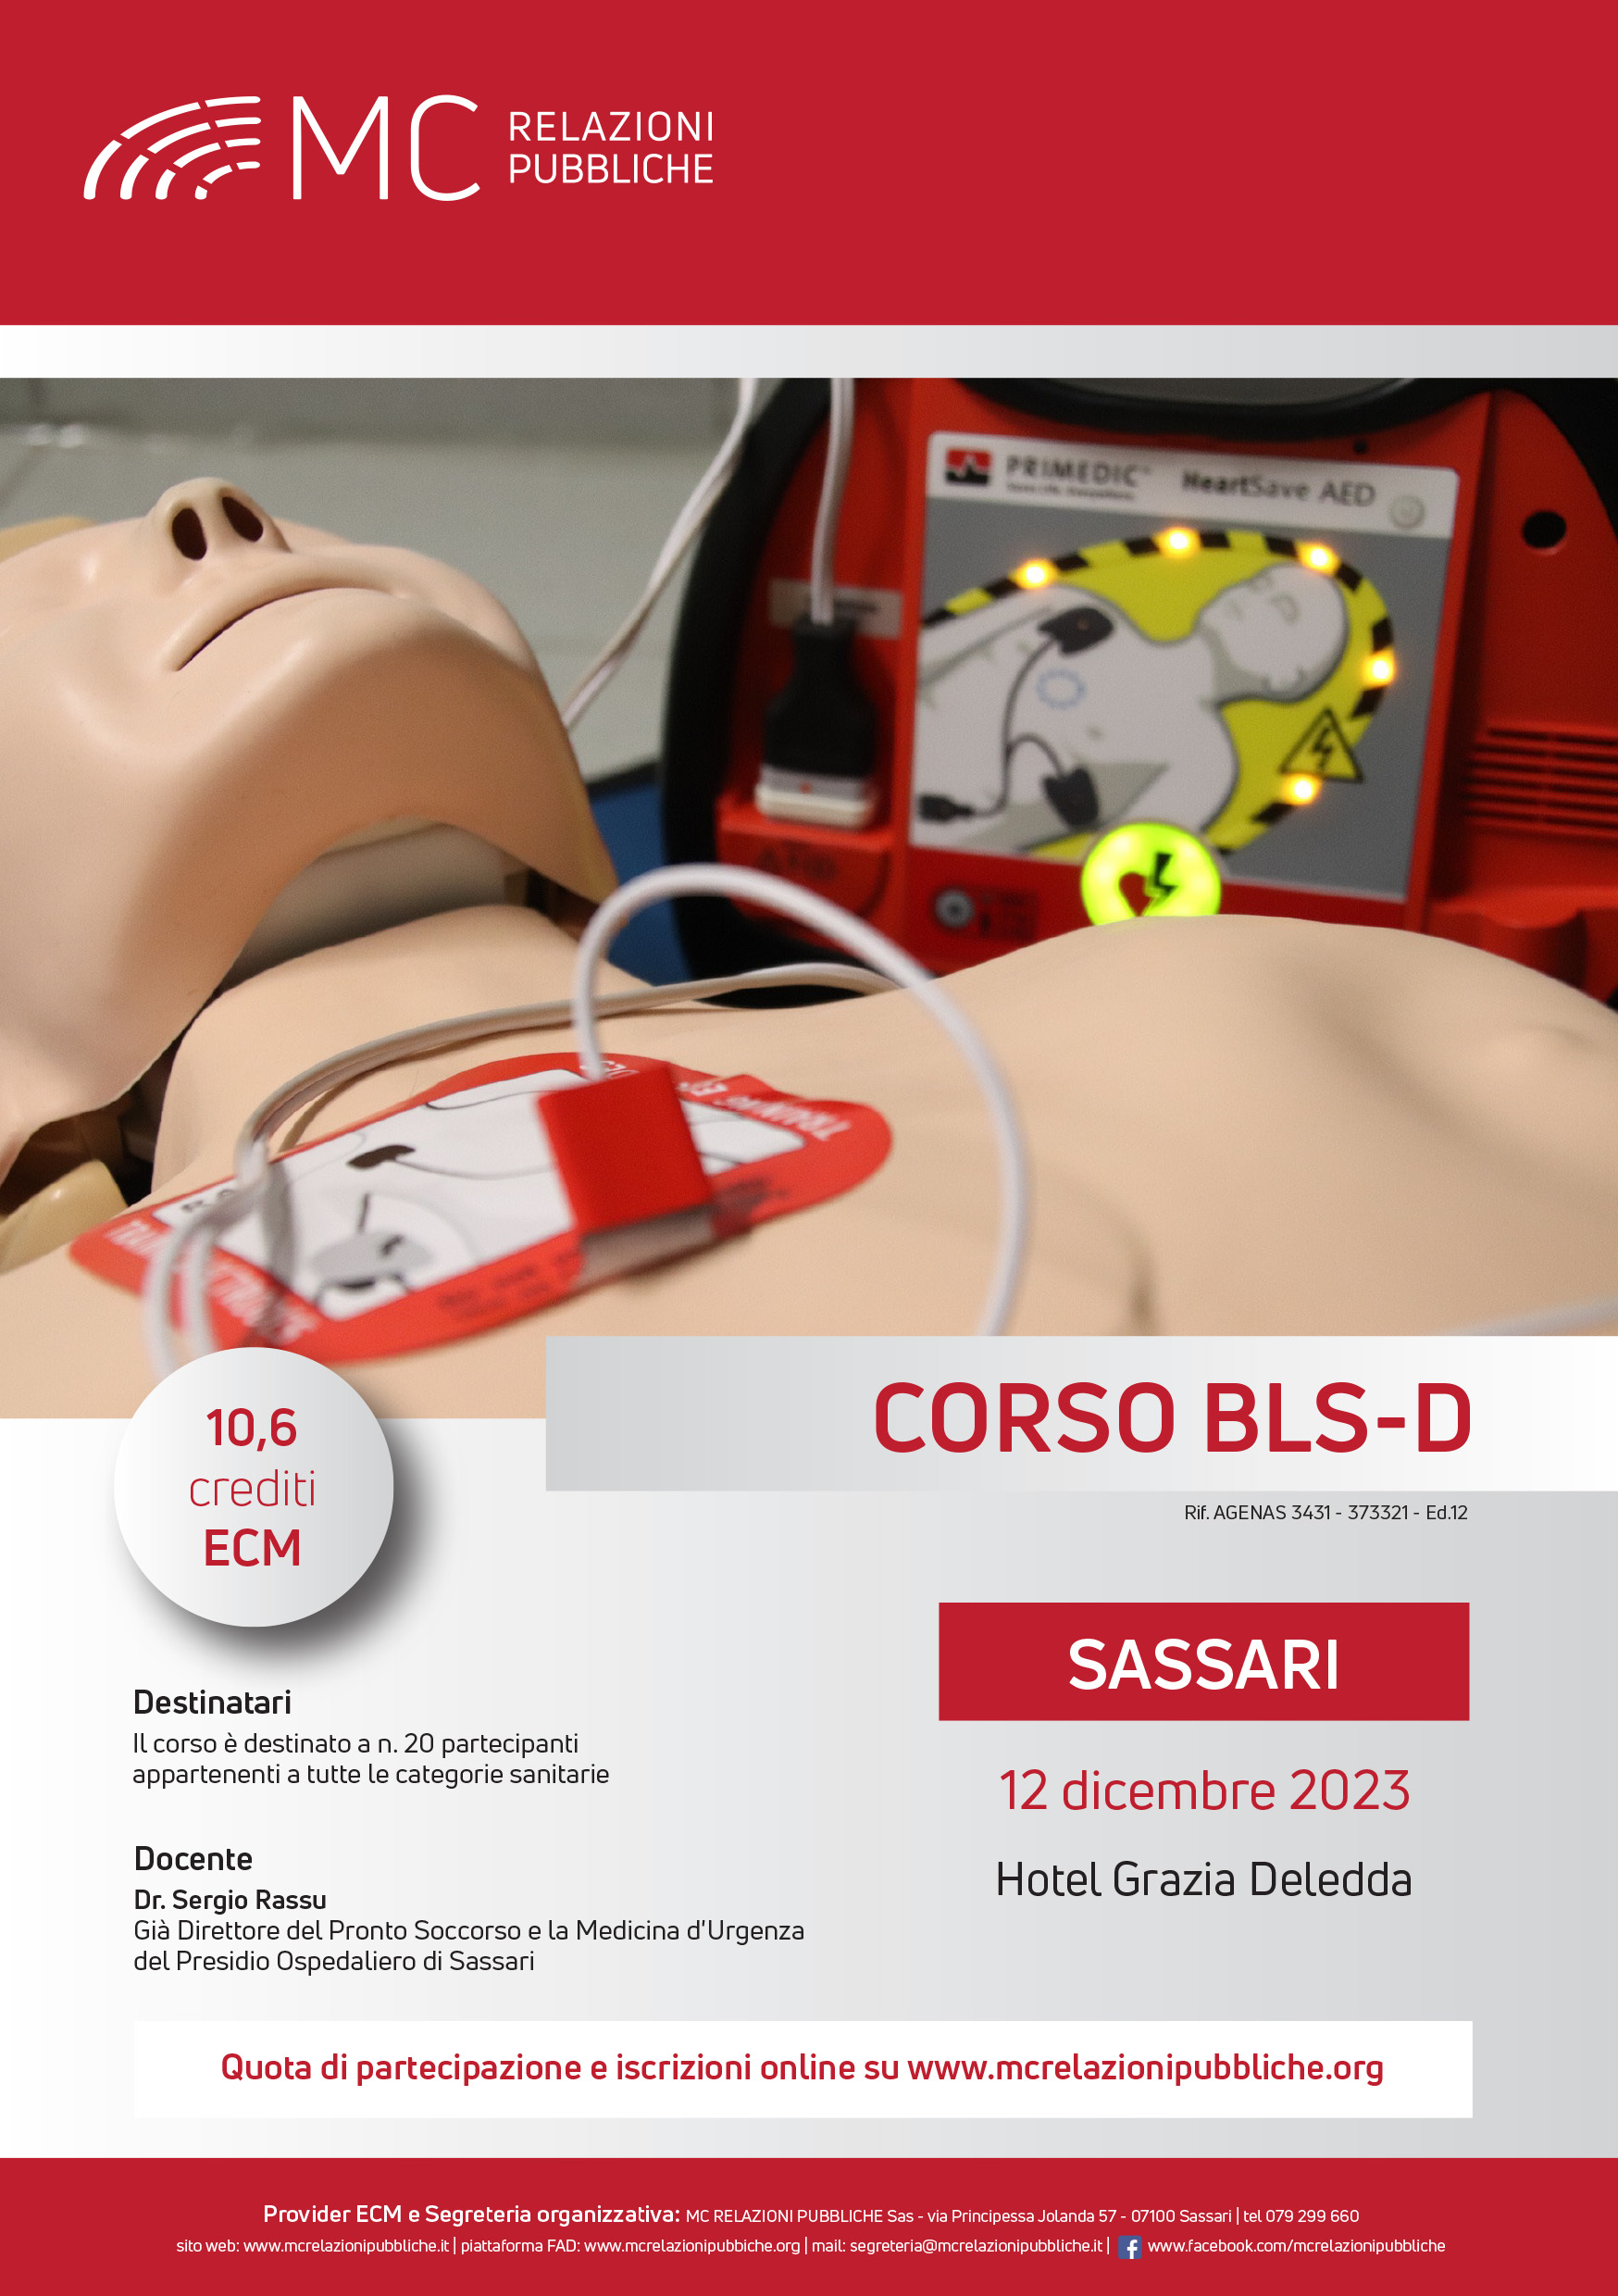 Corso BLS-D. Basic Life Support-Defibrillation - 12 dicembre 2023